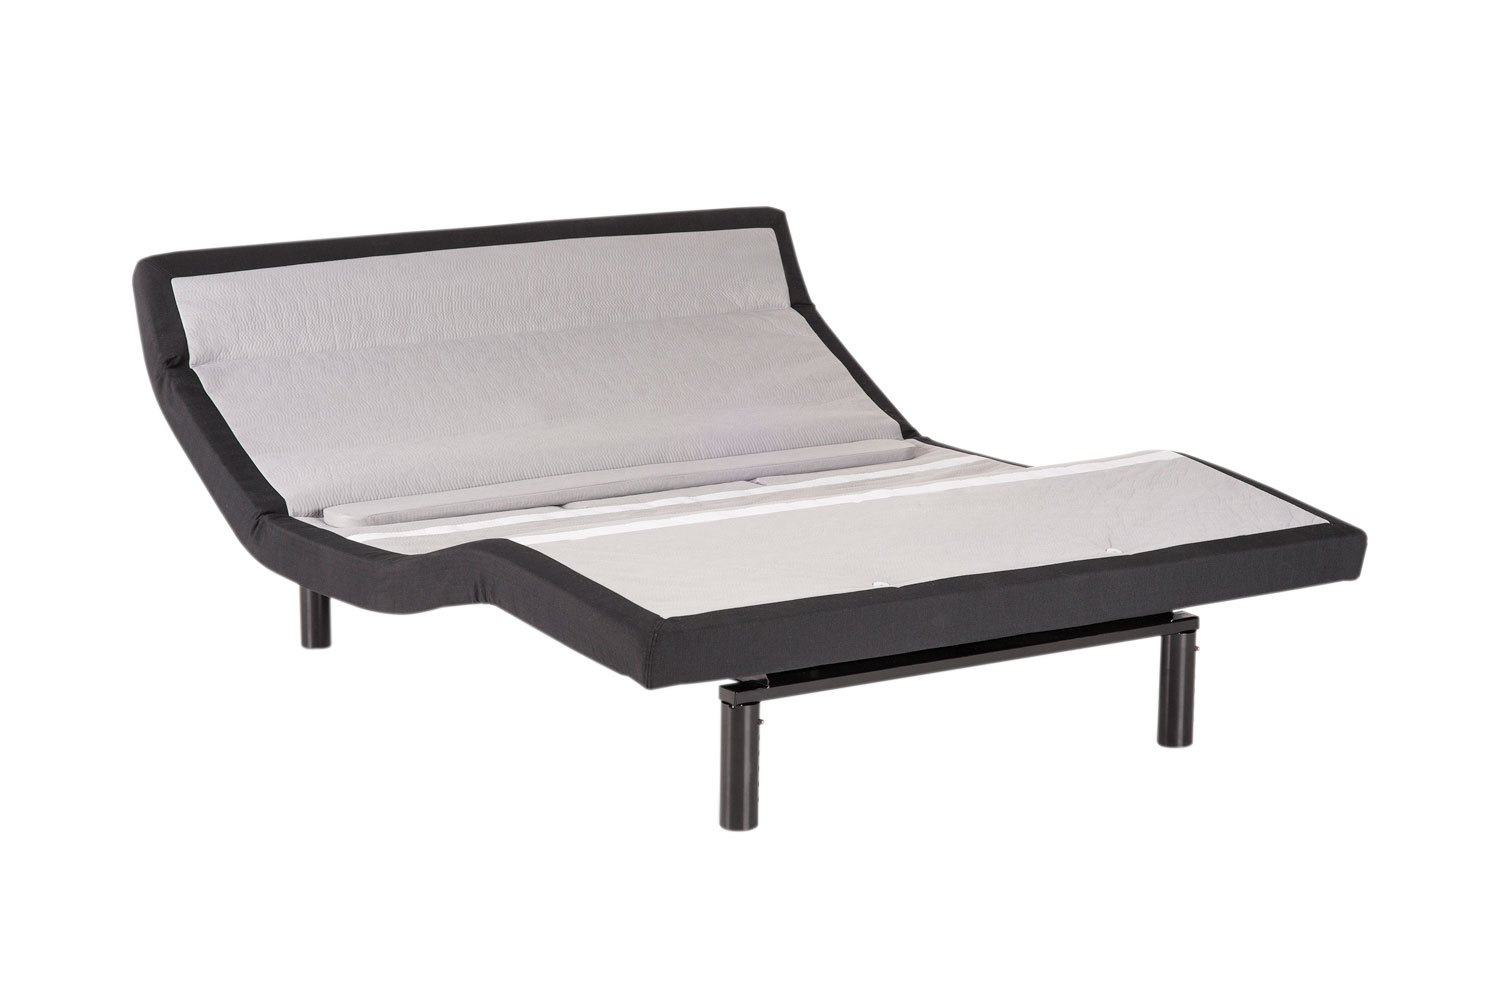 Buy Power 5000 Adjustable Bed Base